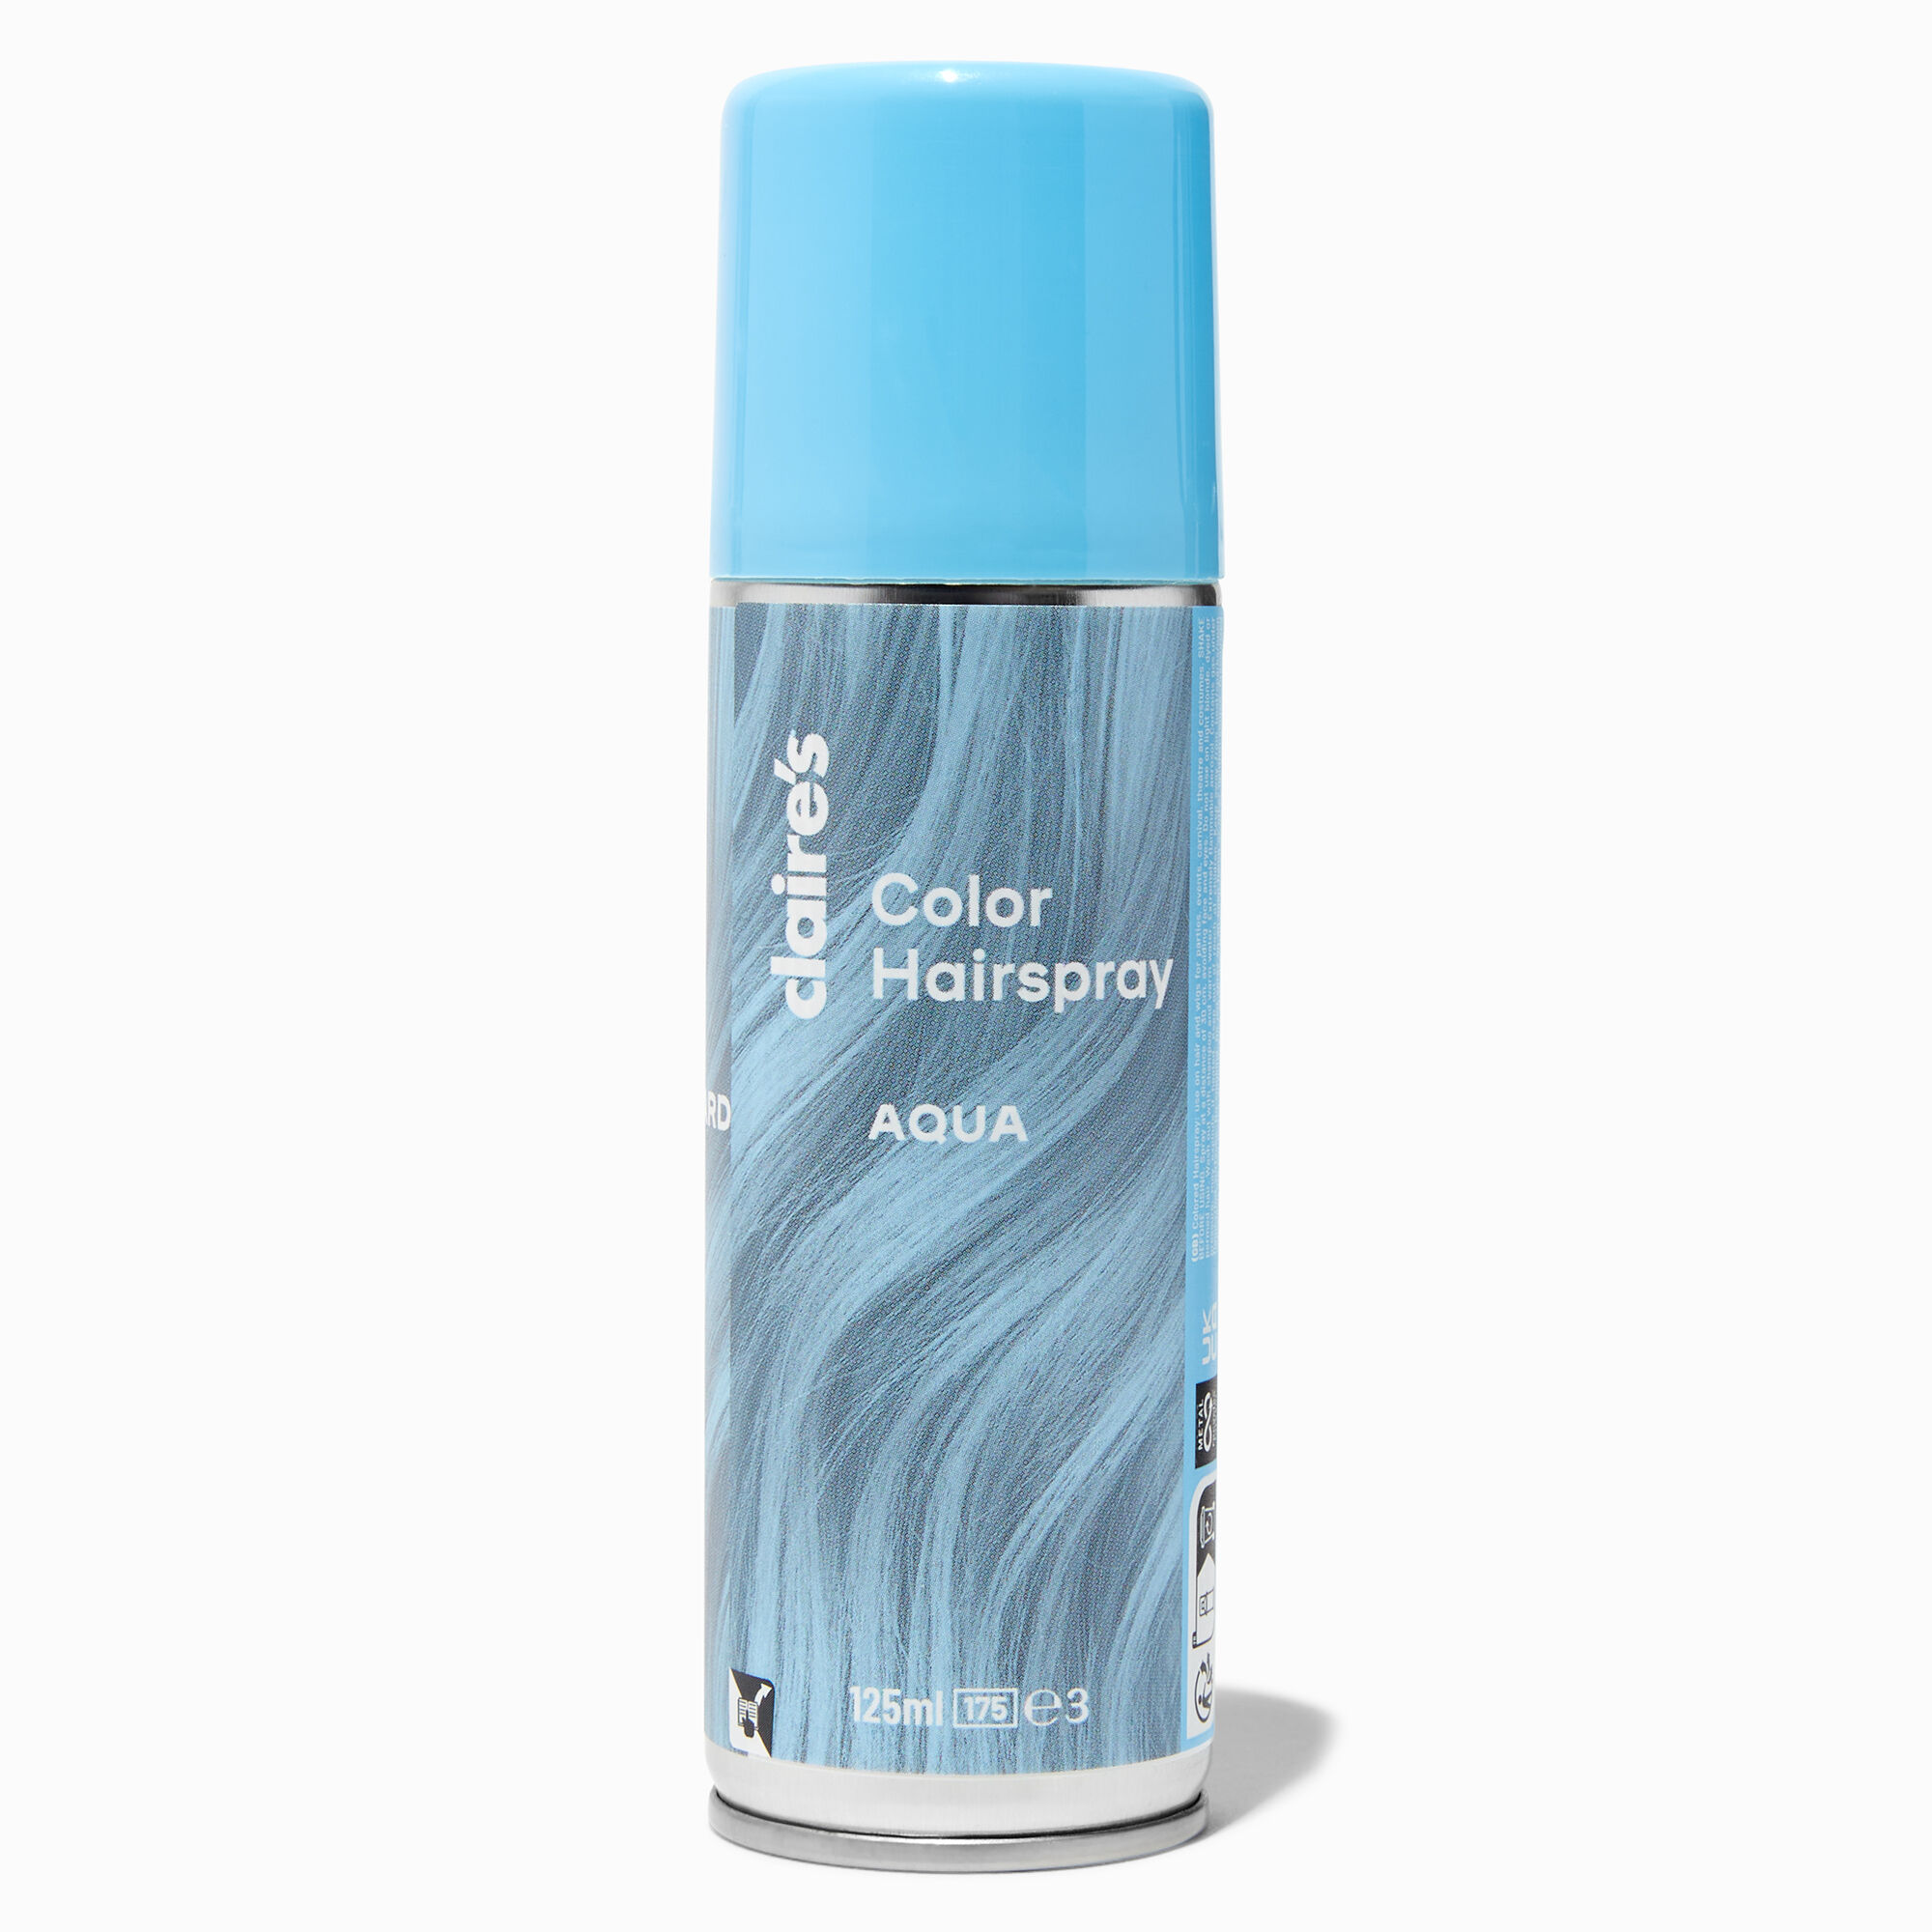 View Claires Aqua Colour Hairspray information